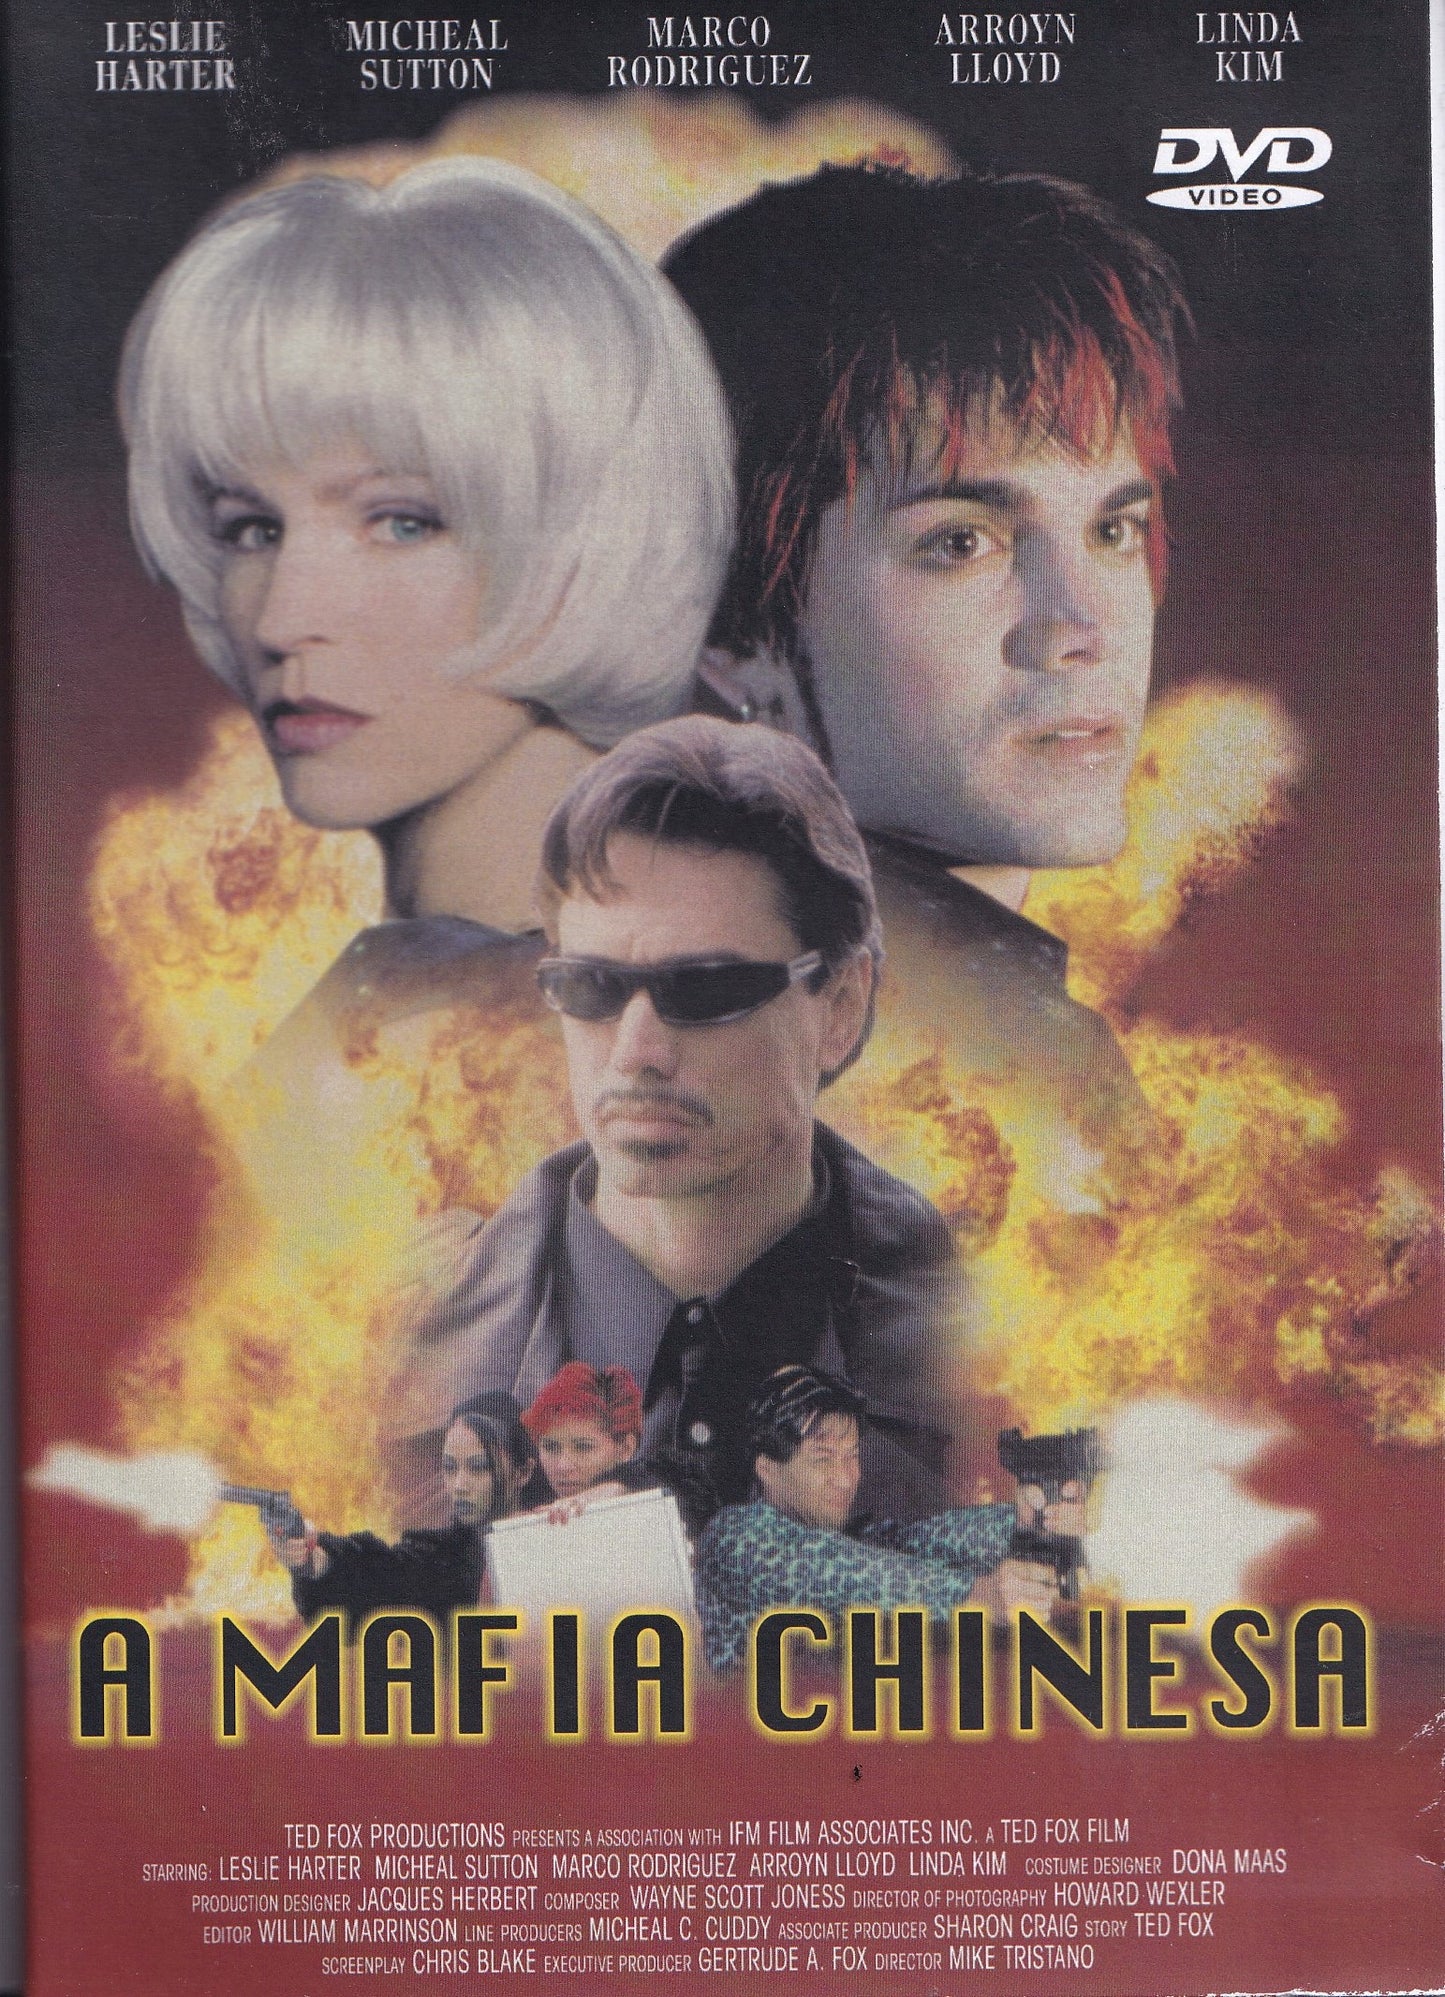 DVD A MAFIA CHINESA - USADO